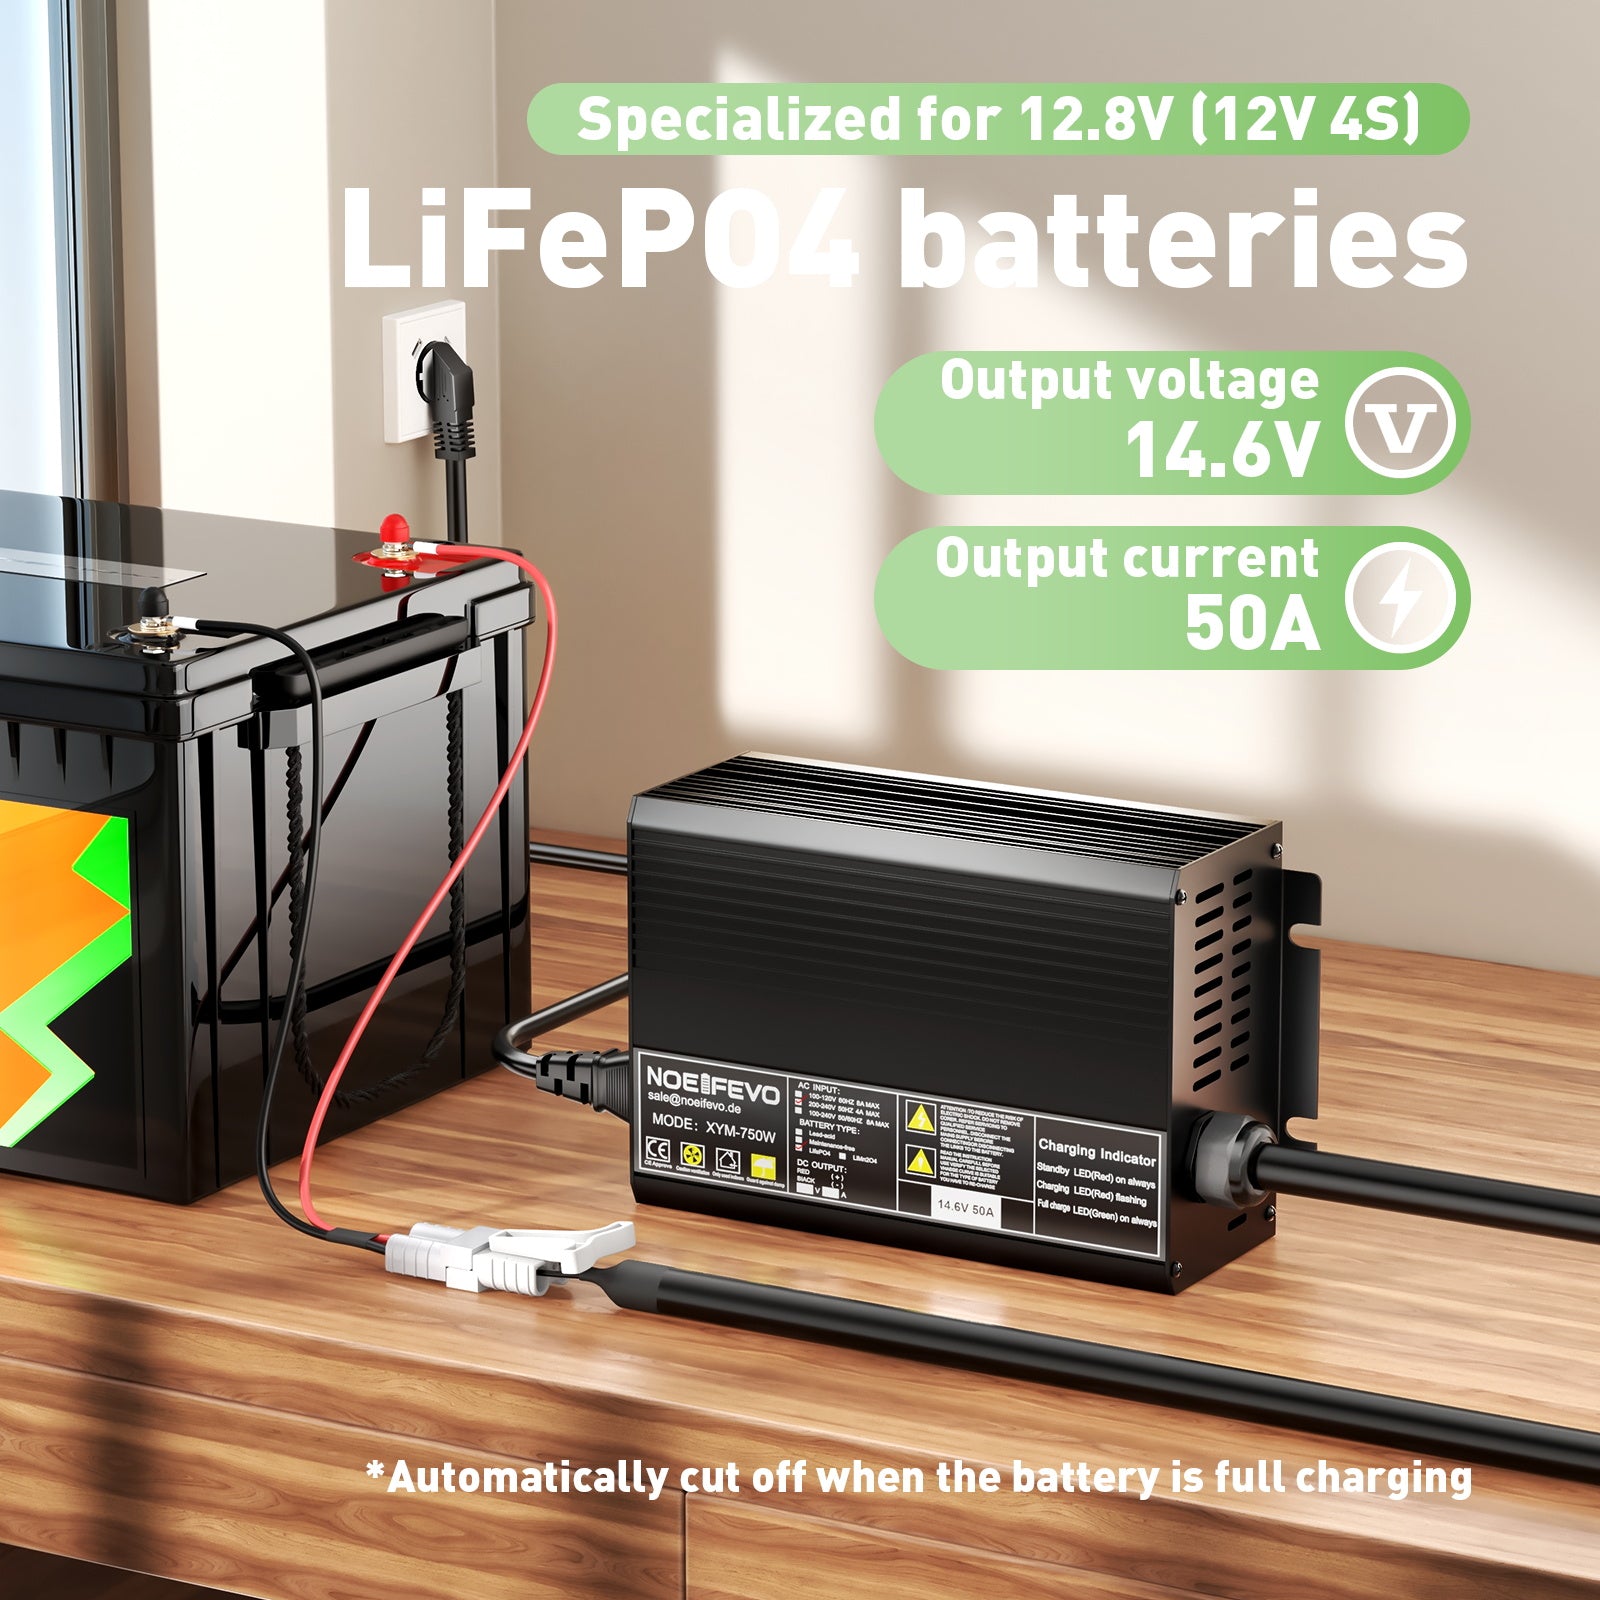 Noeifevo 14.6V 50A LiFePO4 Akku ladegerät für 12V(12.8V) LiFePO4 Batte –  Smart LifePO4 Batterie & Heimspeicherung von Energie & Intelligentes  Ladegerät